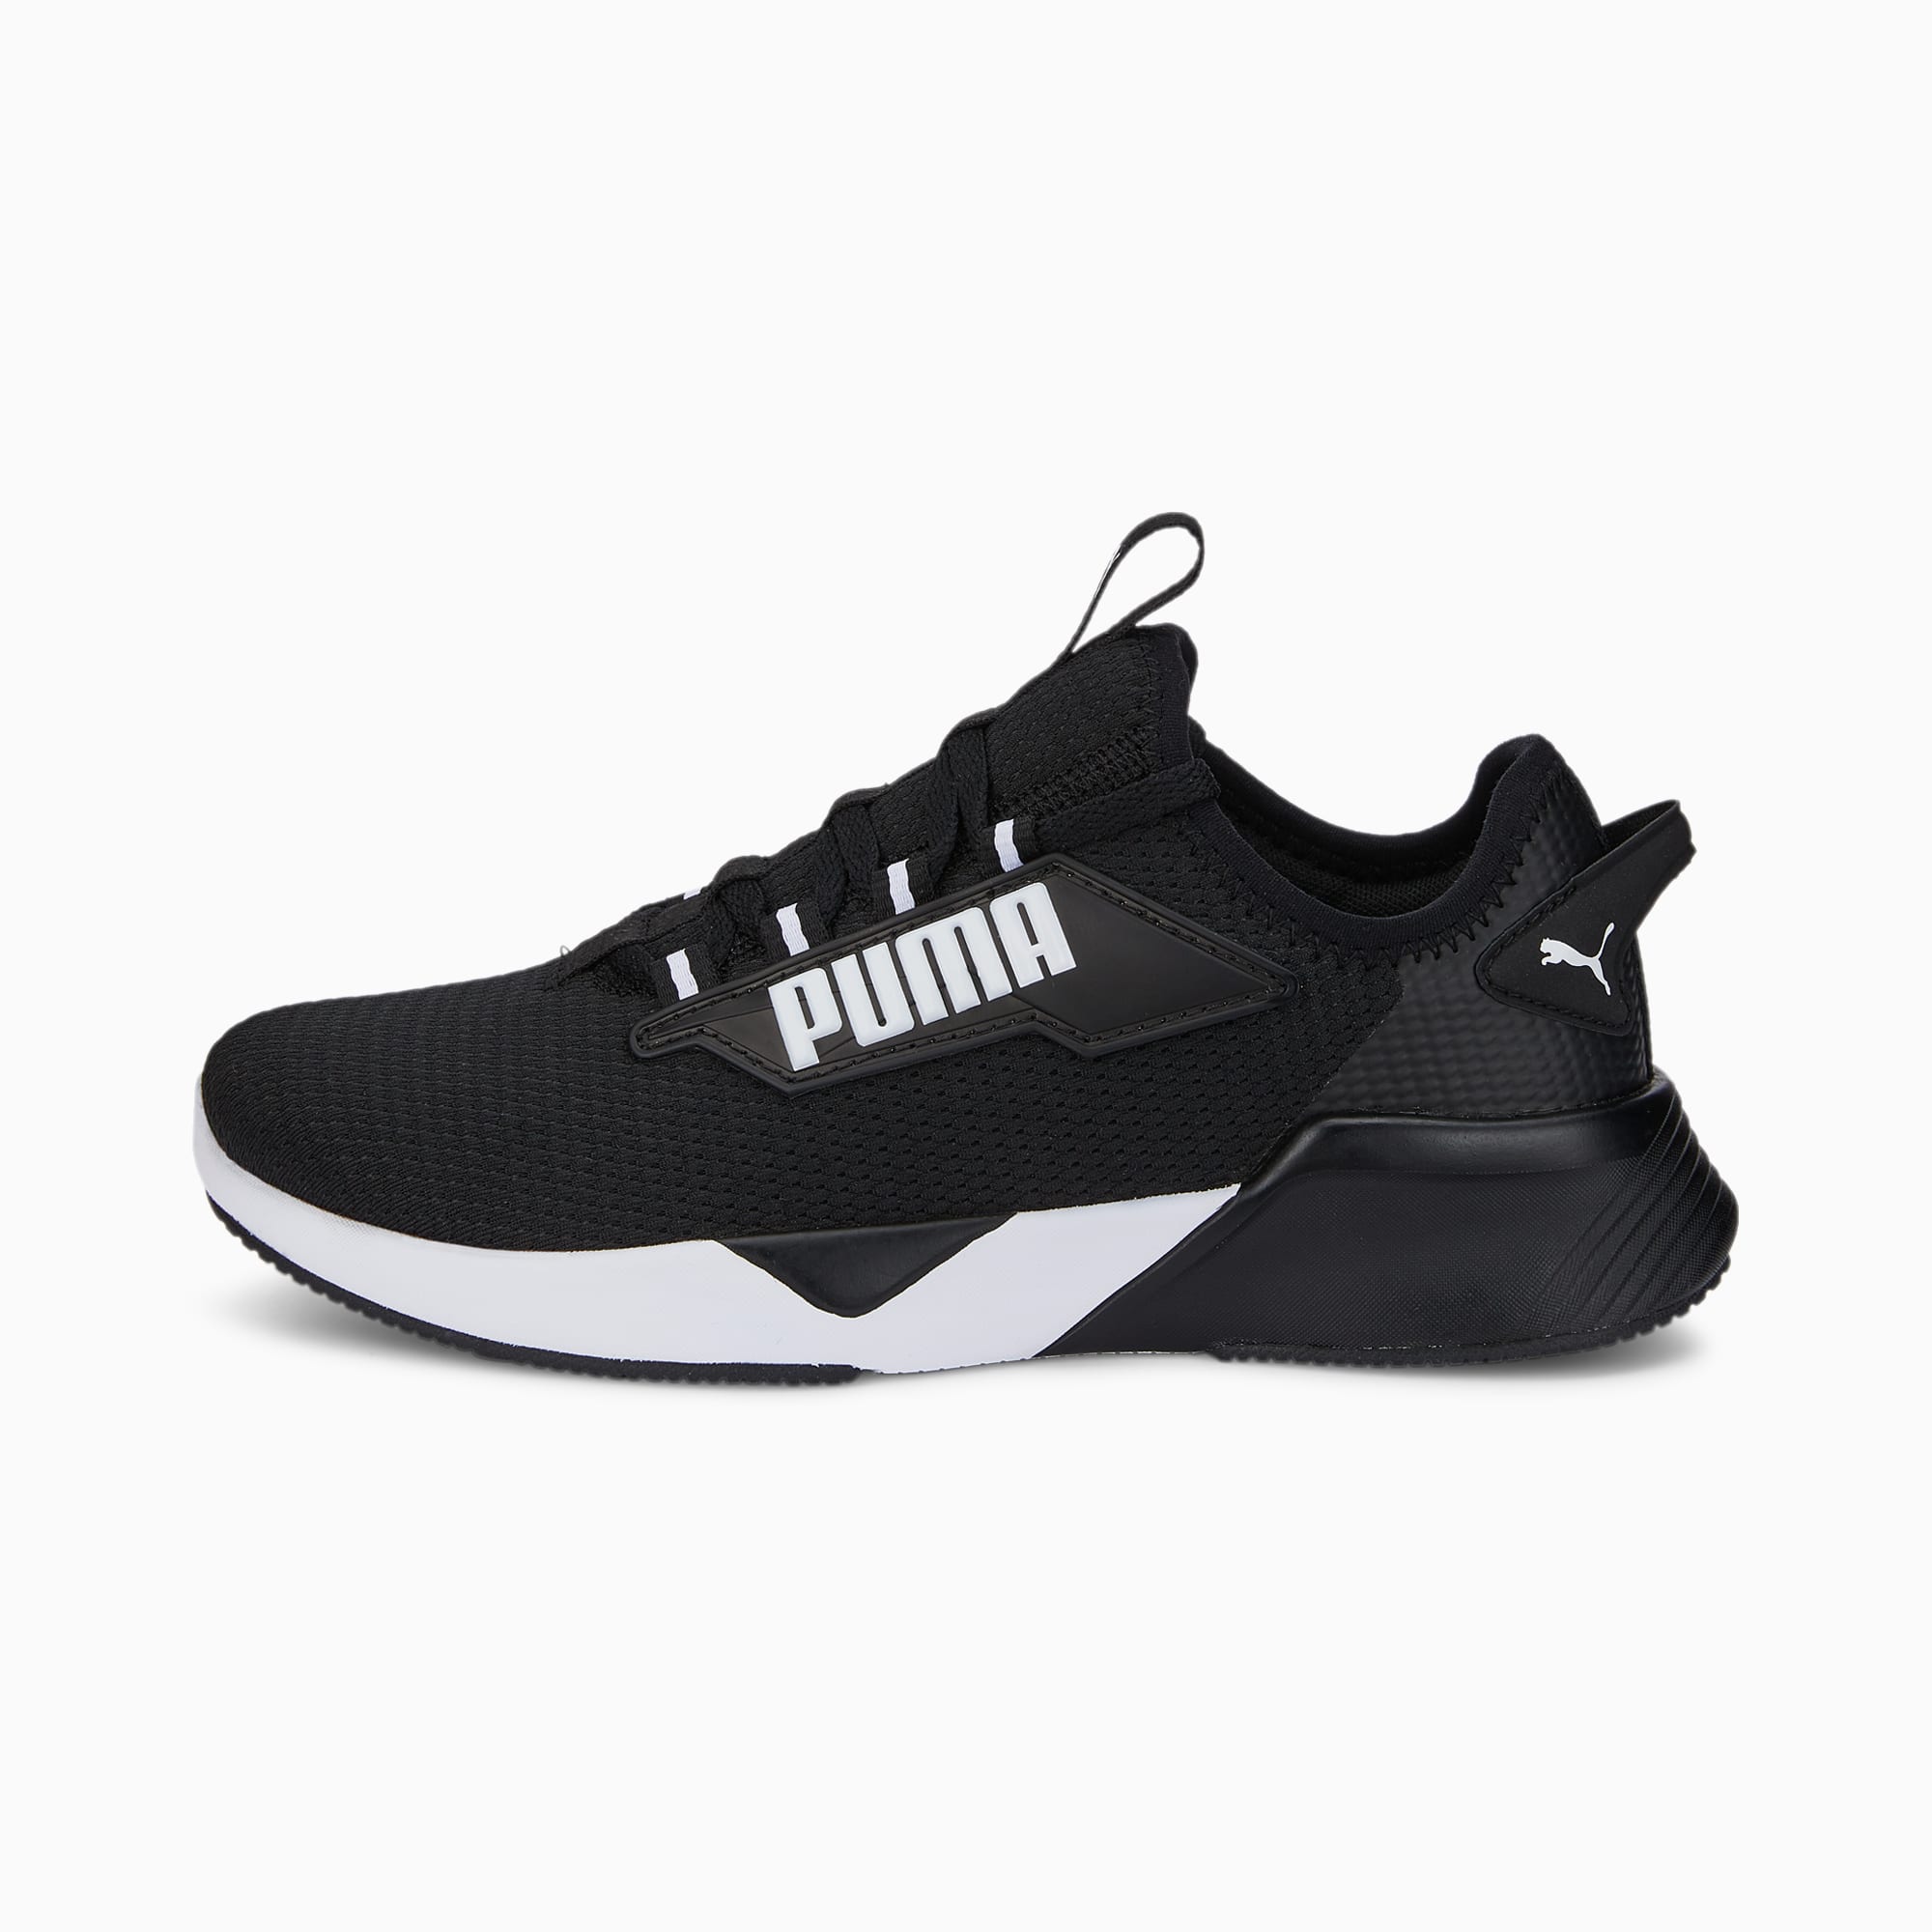 PUMA Retaliate 2 Sneakers Jugend Schuhe, Schwarz/Weiß, Größe: 35.5, Schuhe